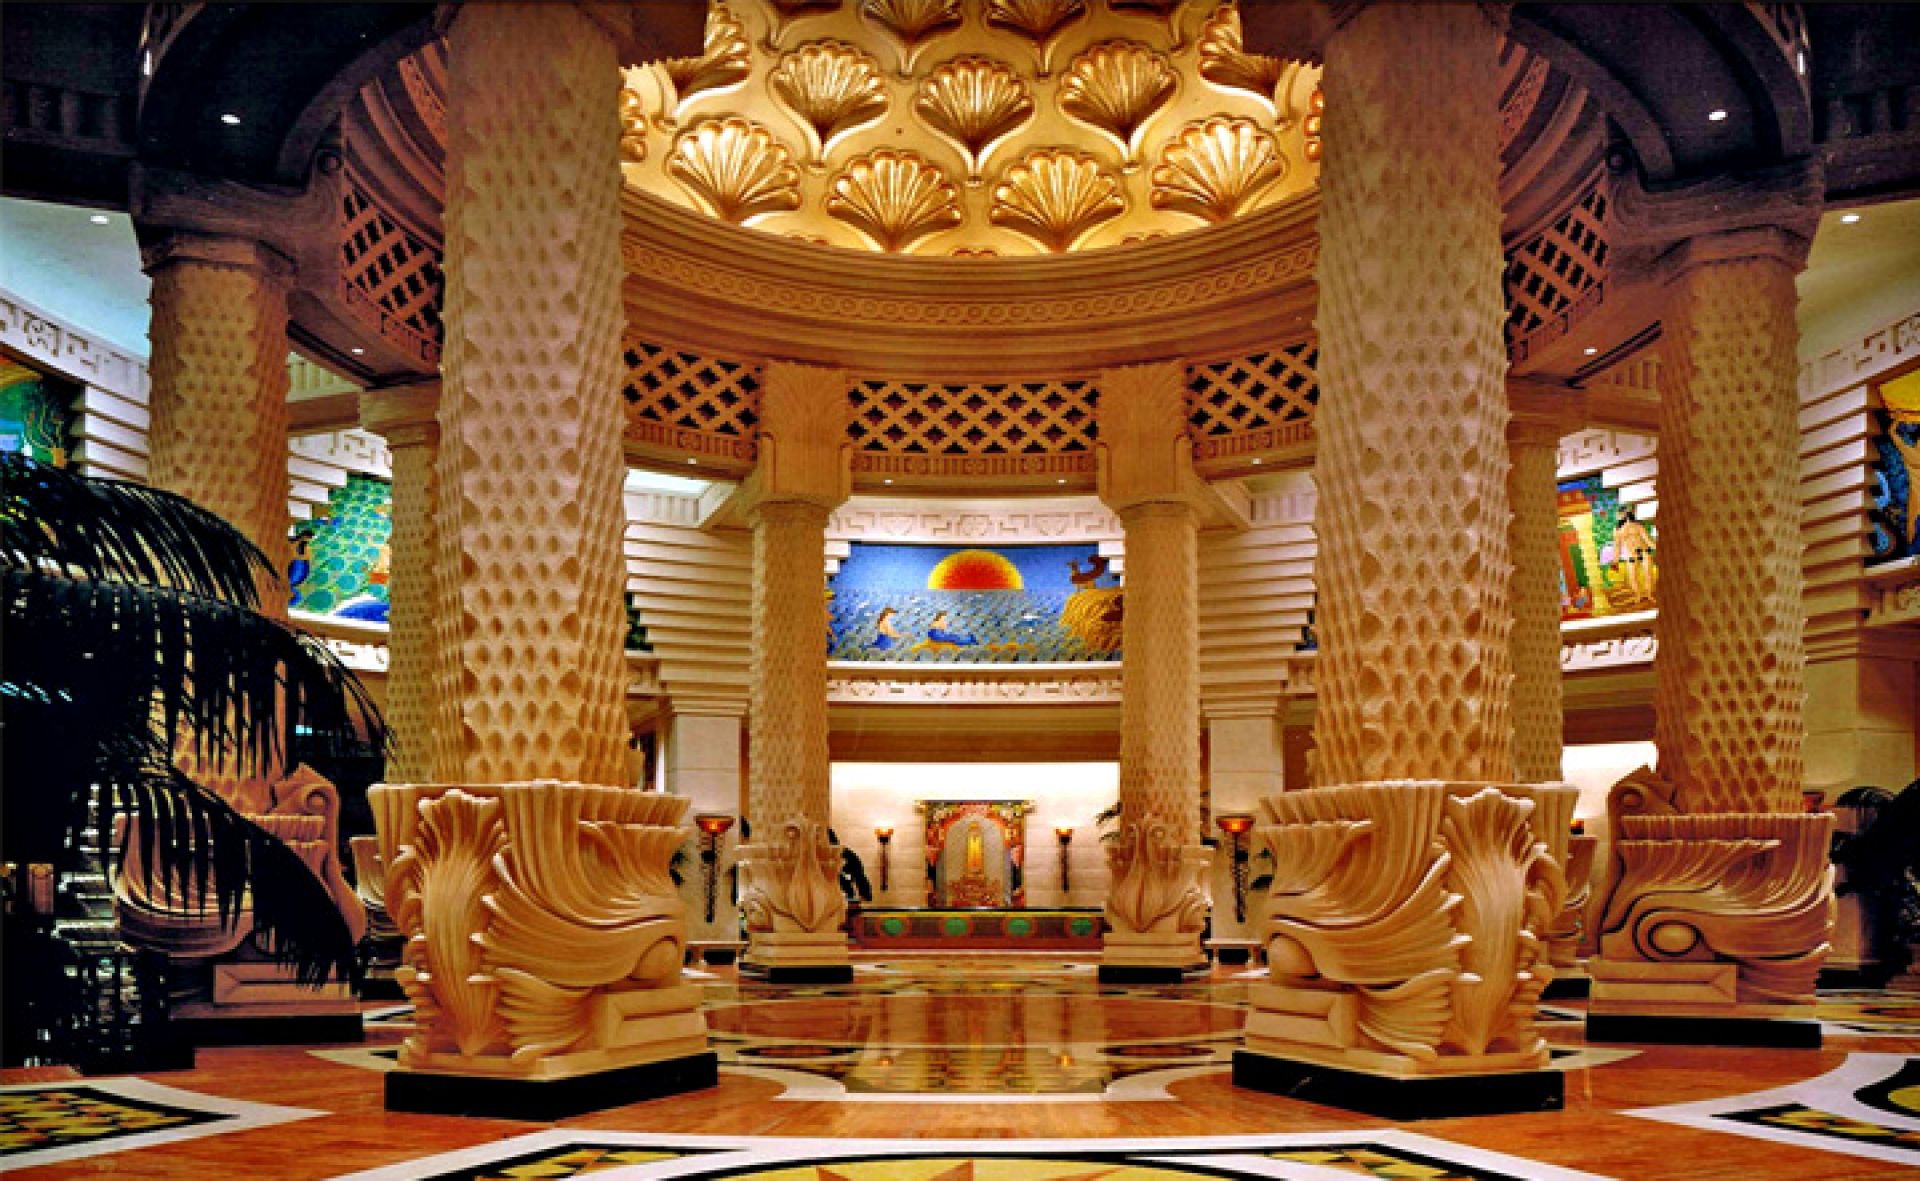 Atlantis Resort And Casino Bahamas